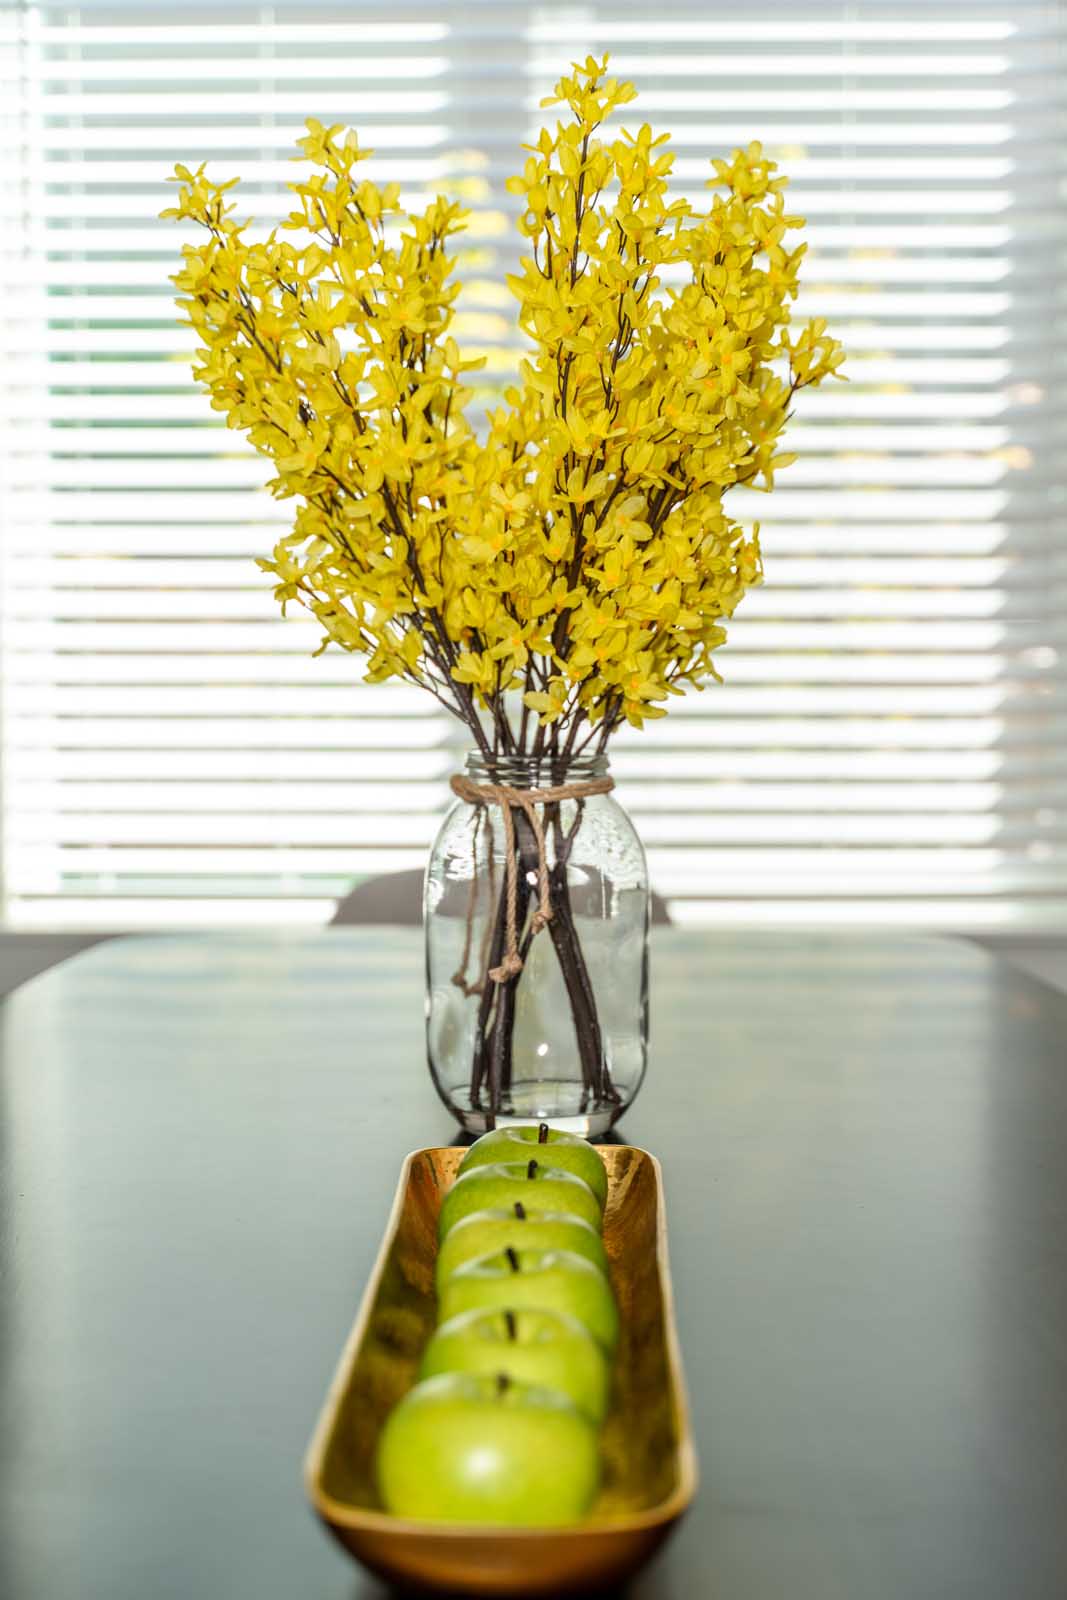 Yellow Flowers in glass vessel